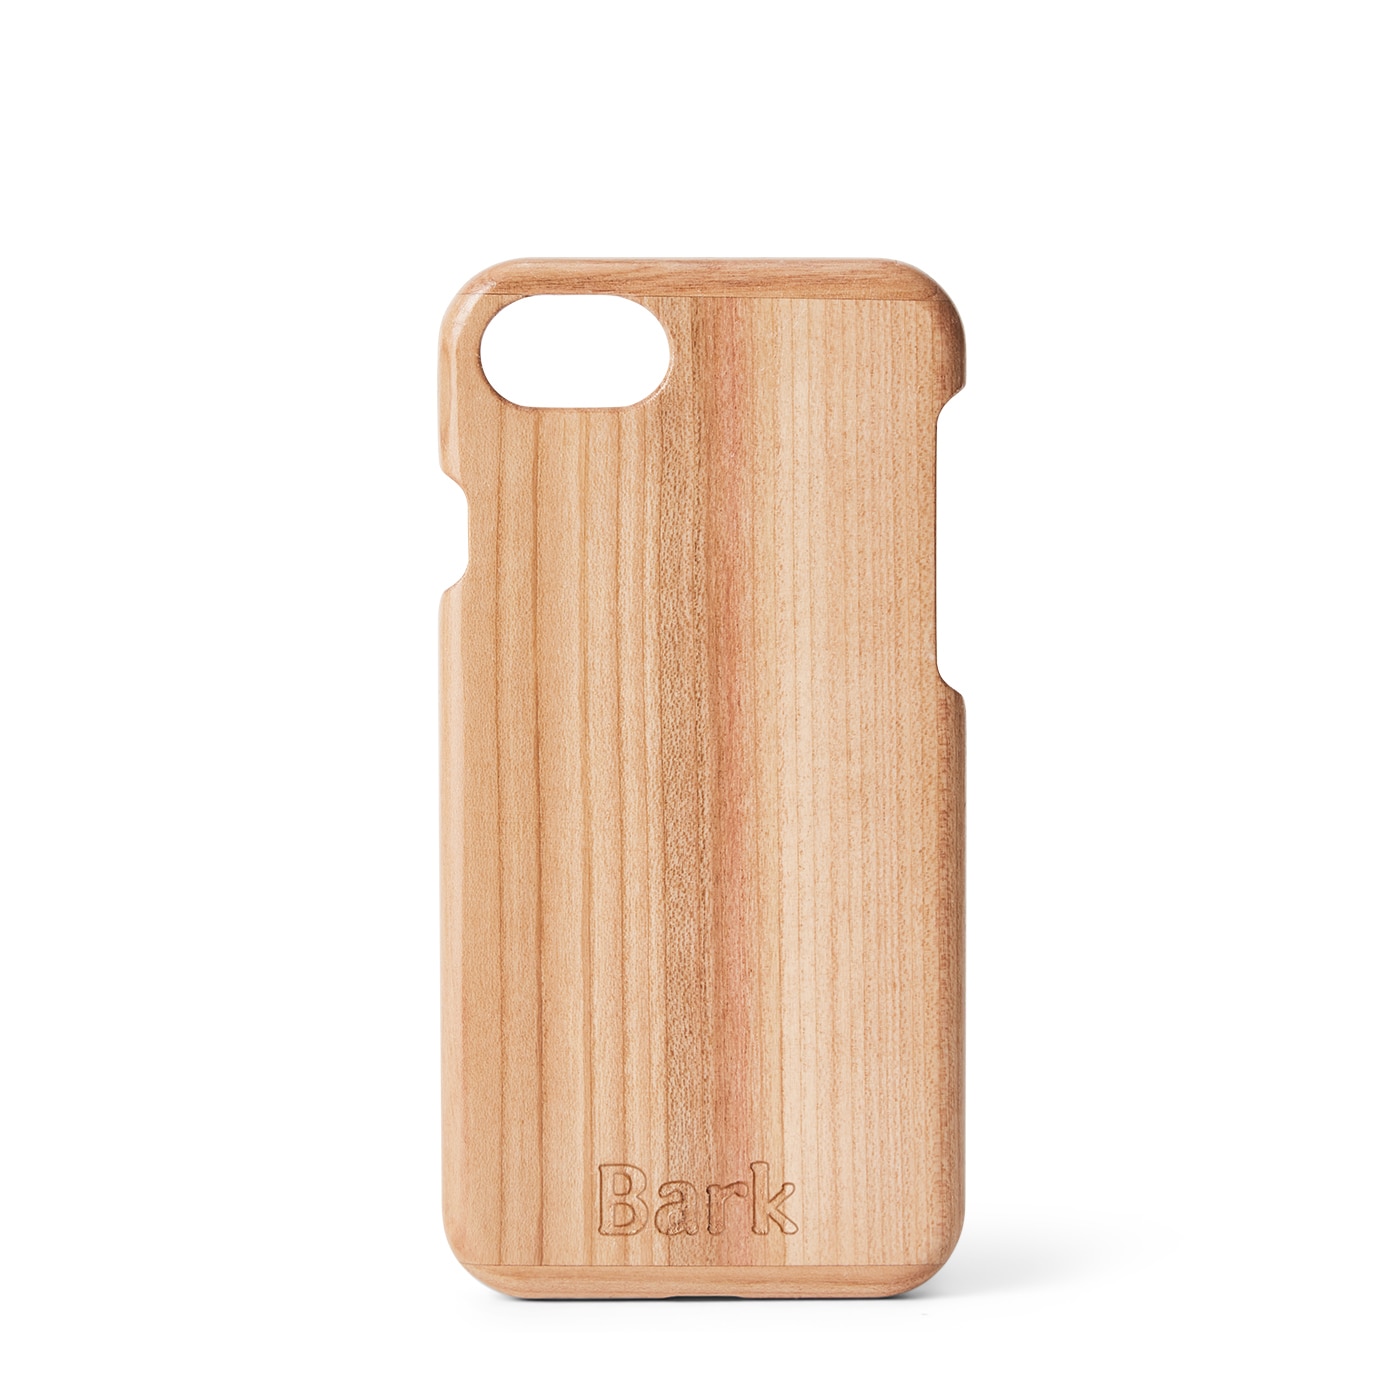 iPhone 8 case made of Swedish hardwood - Körsbär